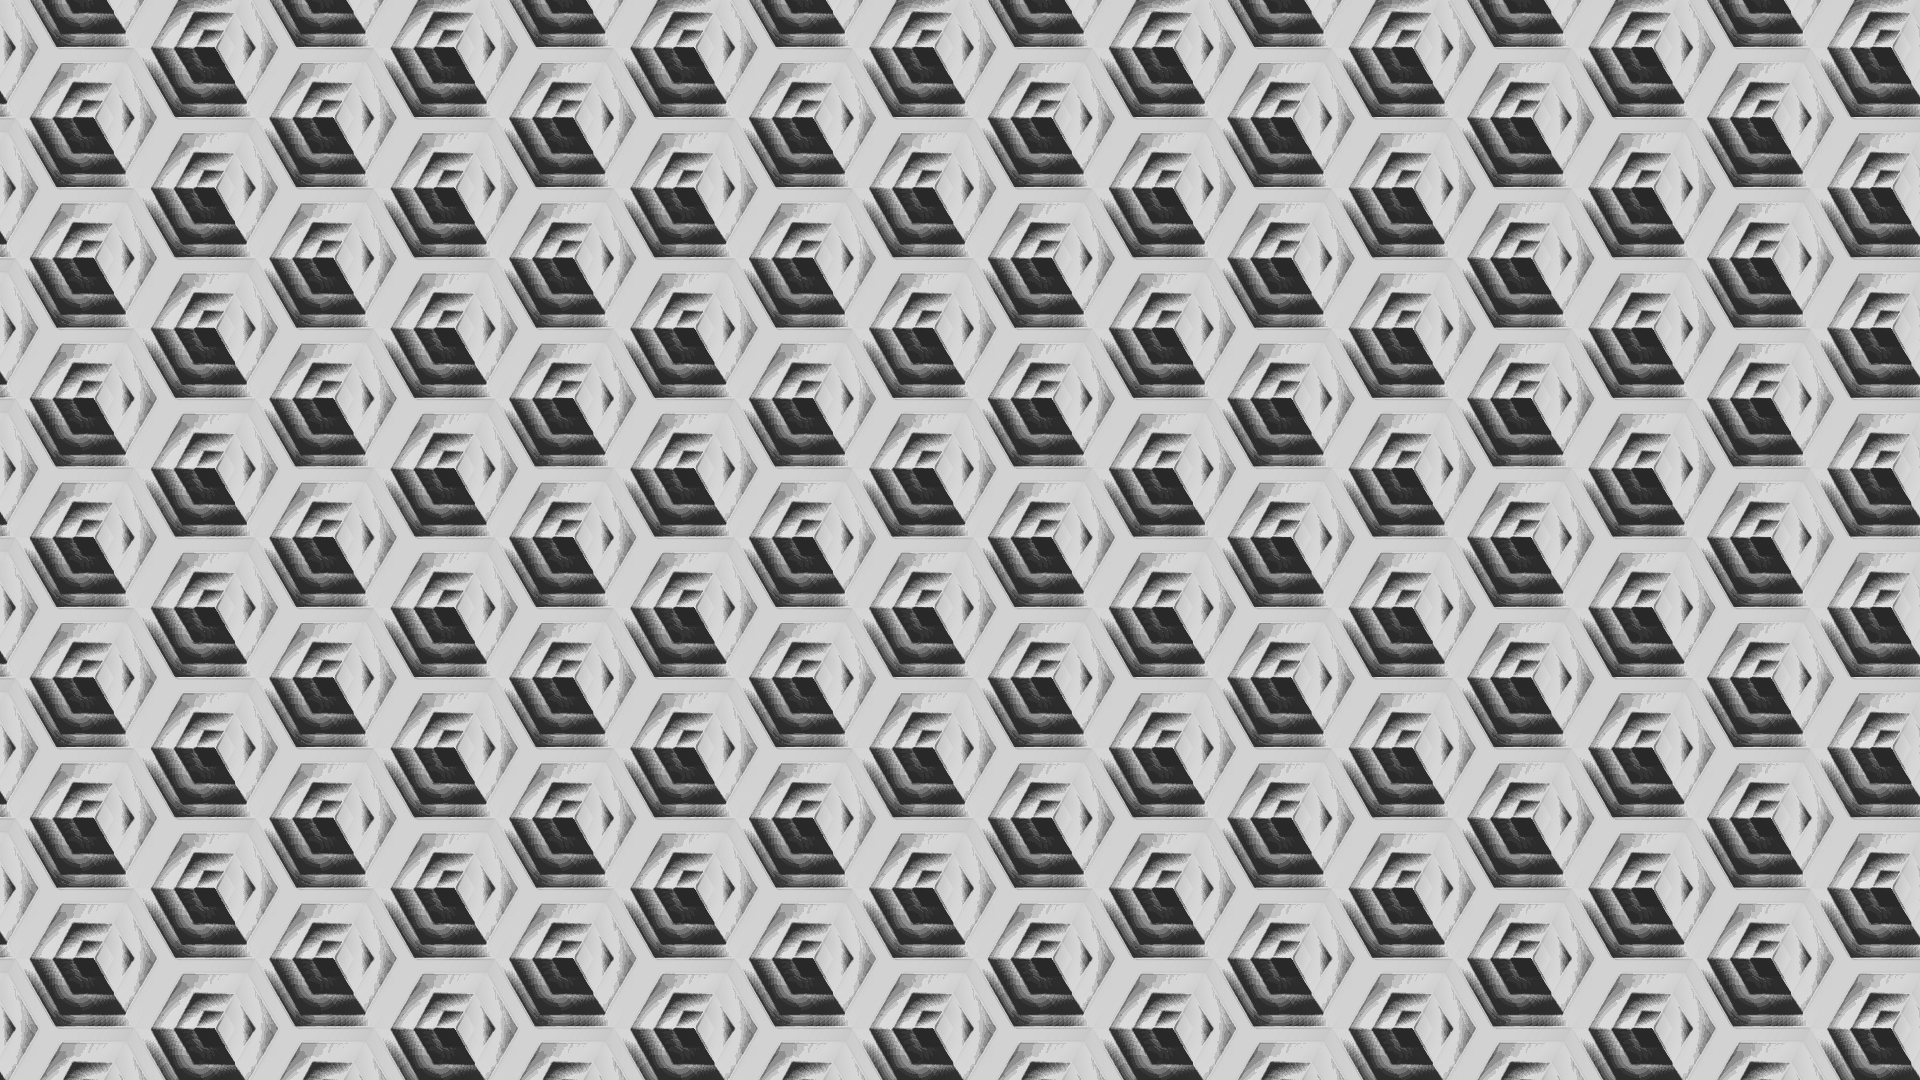 Black White Cube Square Tile Mirrored 1920x1080